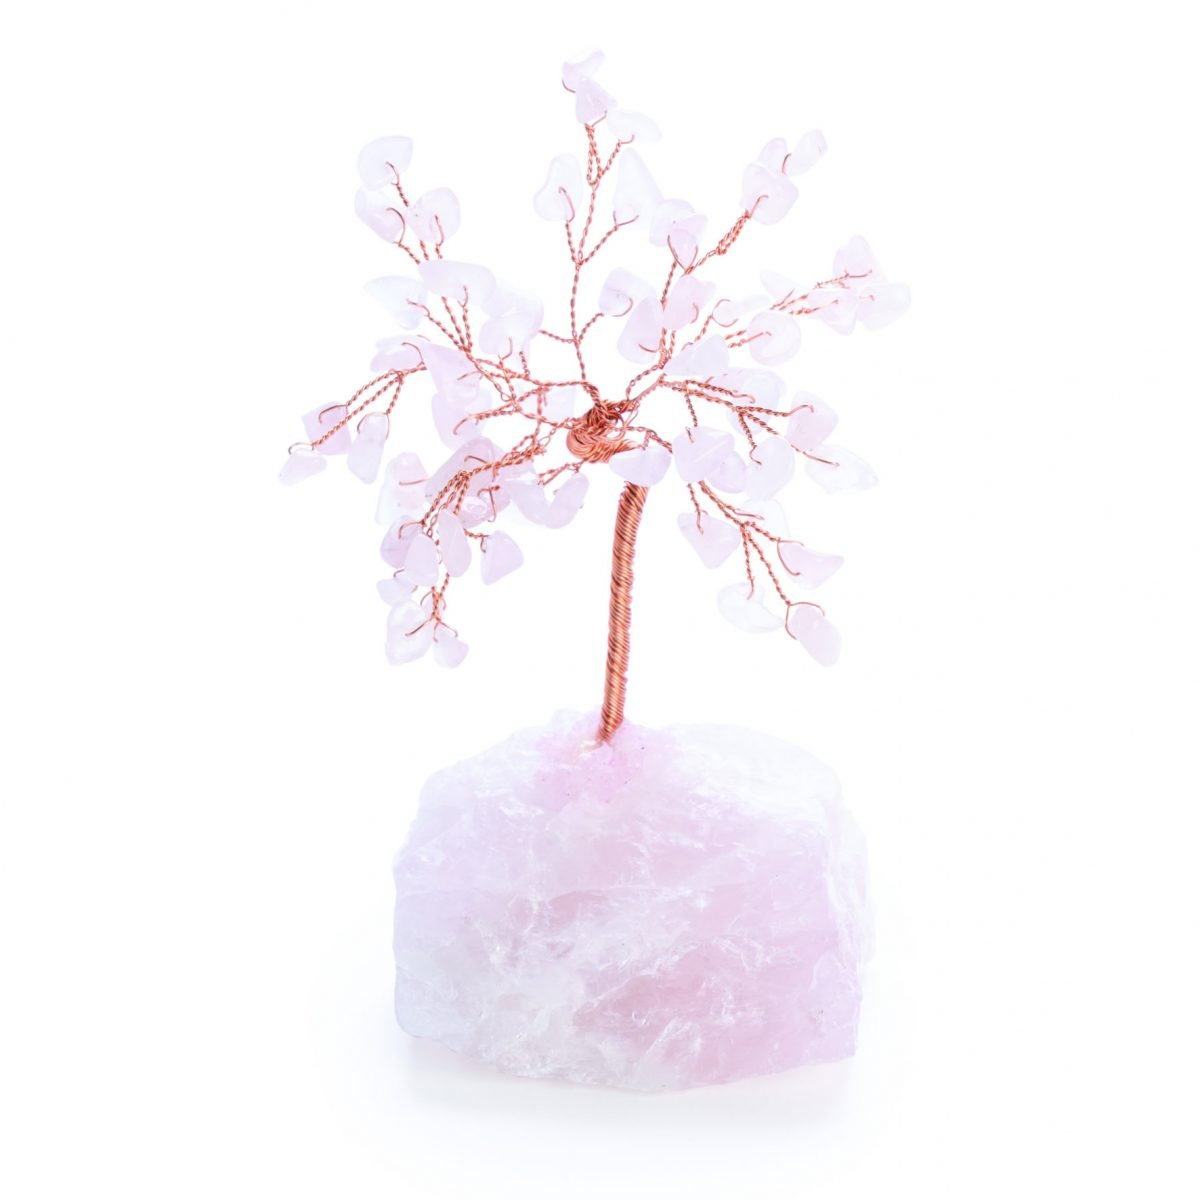 Crystal Gemstone Tree - Rose Quartz (Small)